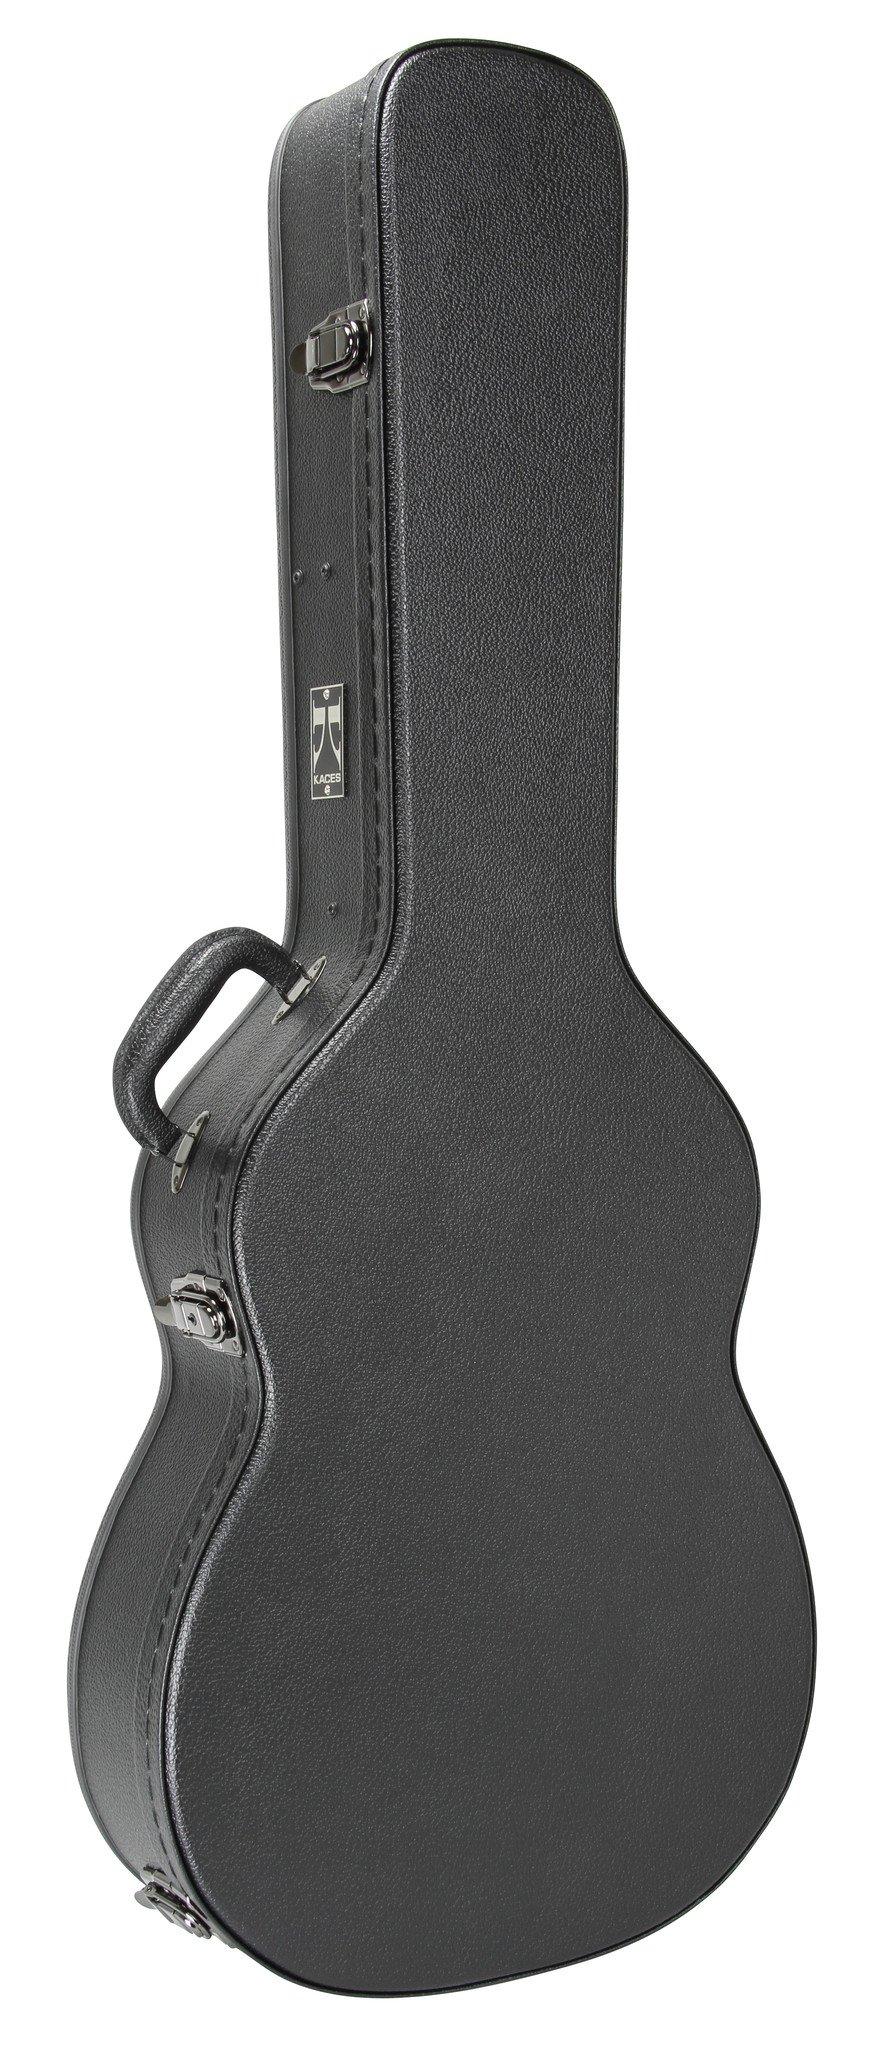 Kaces Hardshell Guitar Case - Classical Guitar